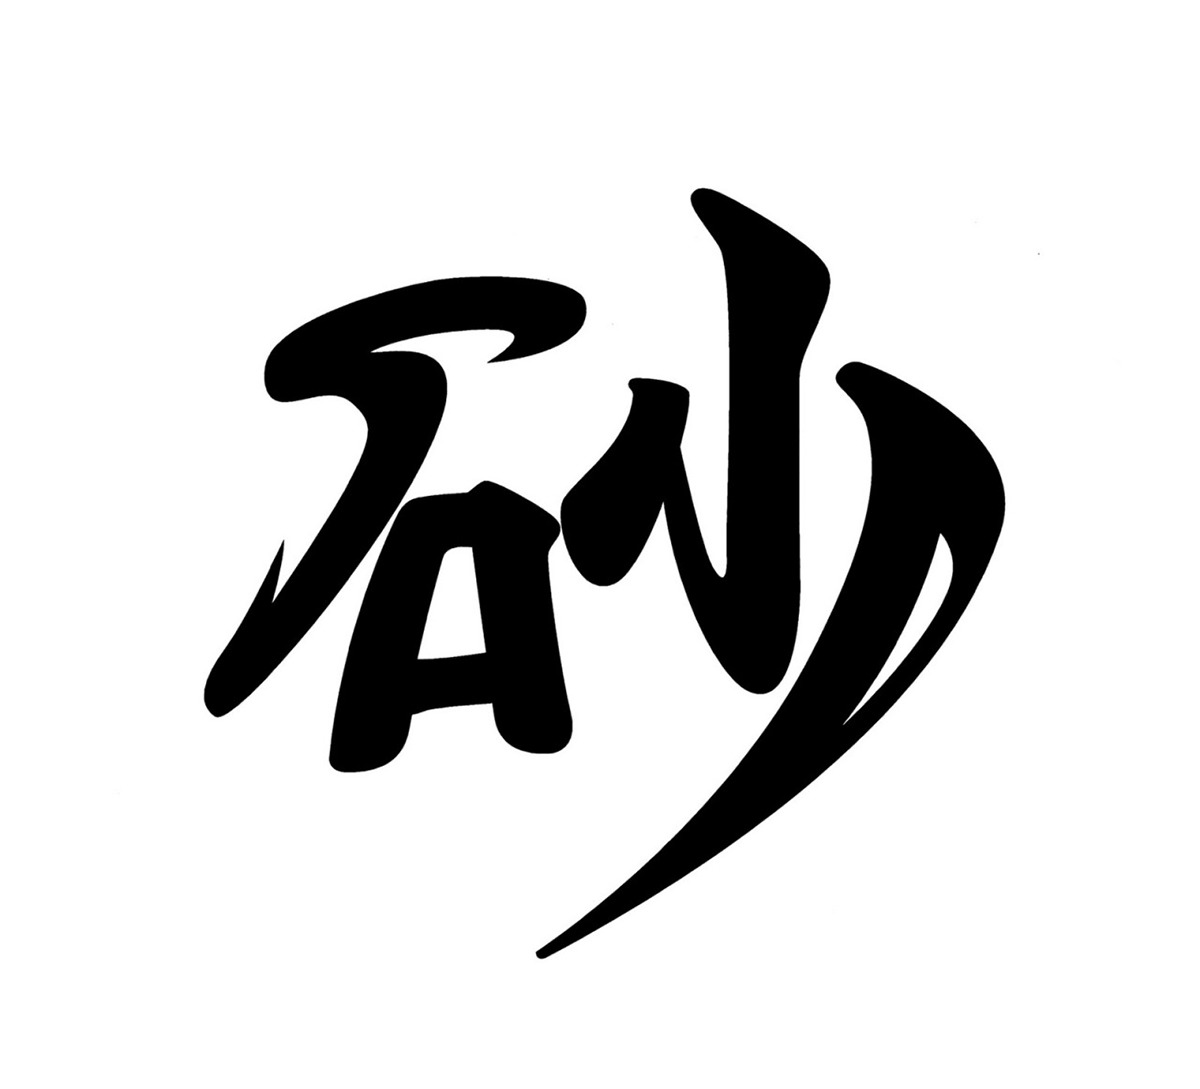 ambigram